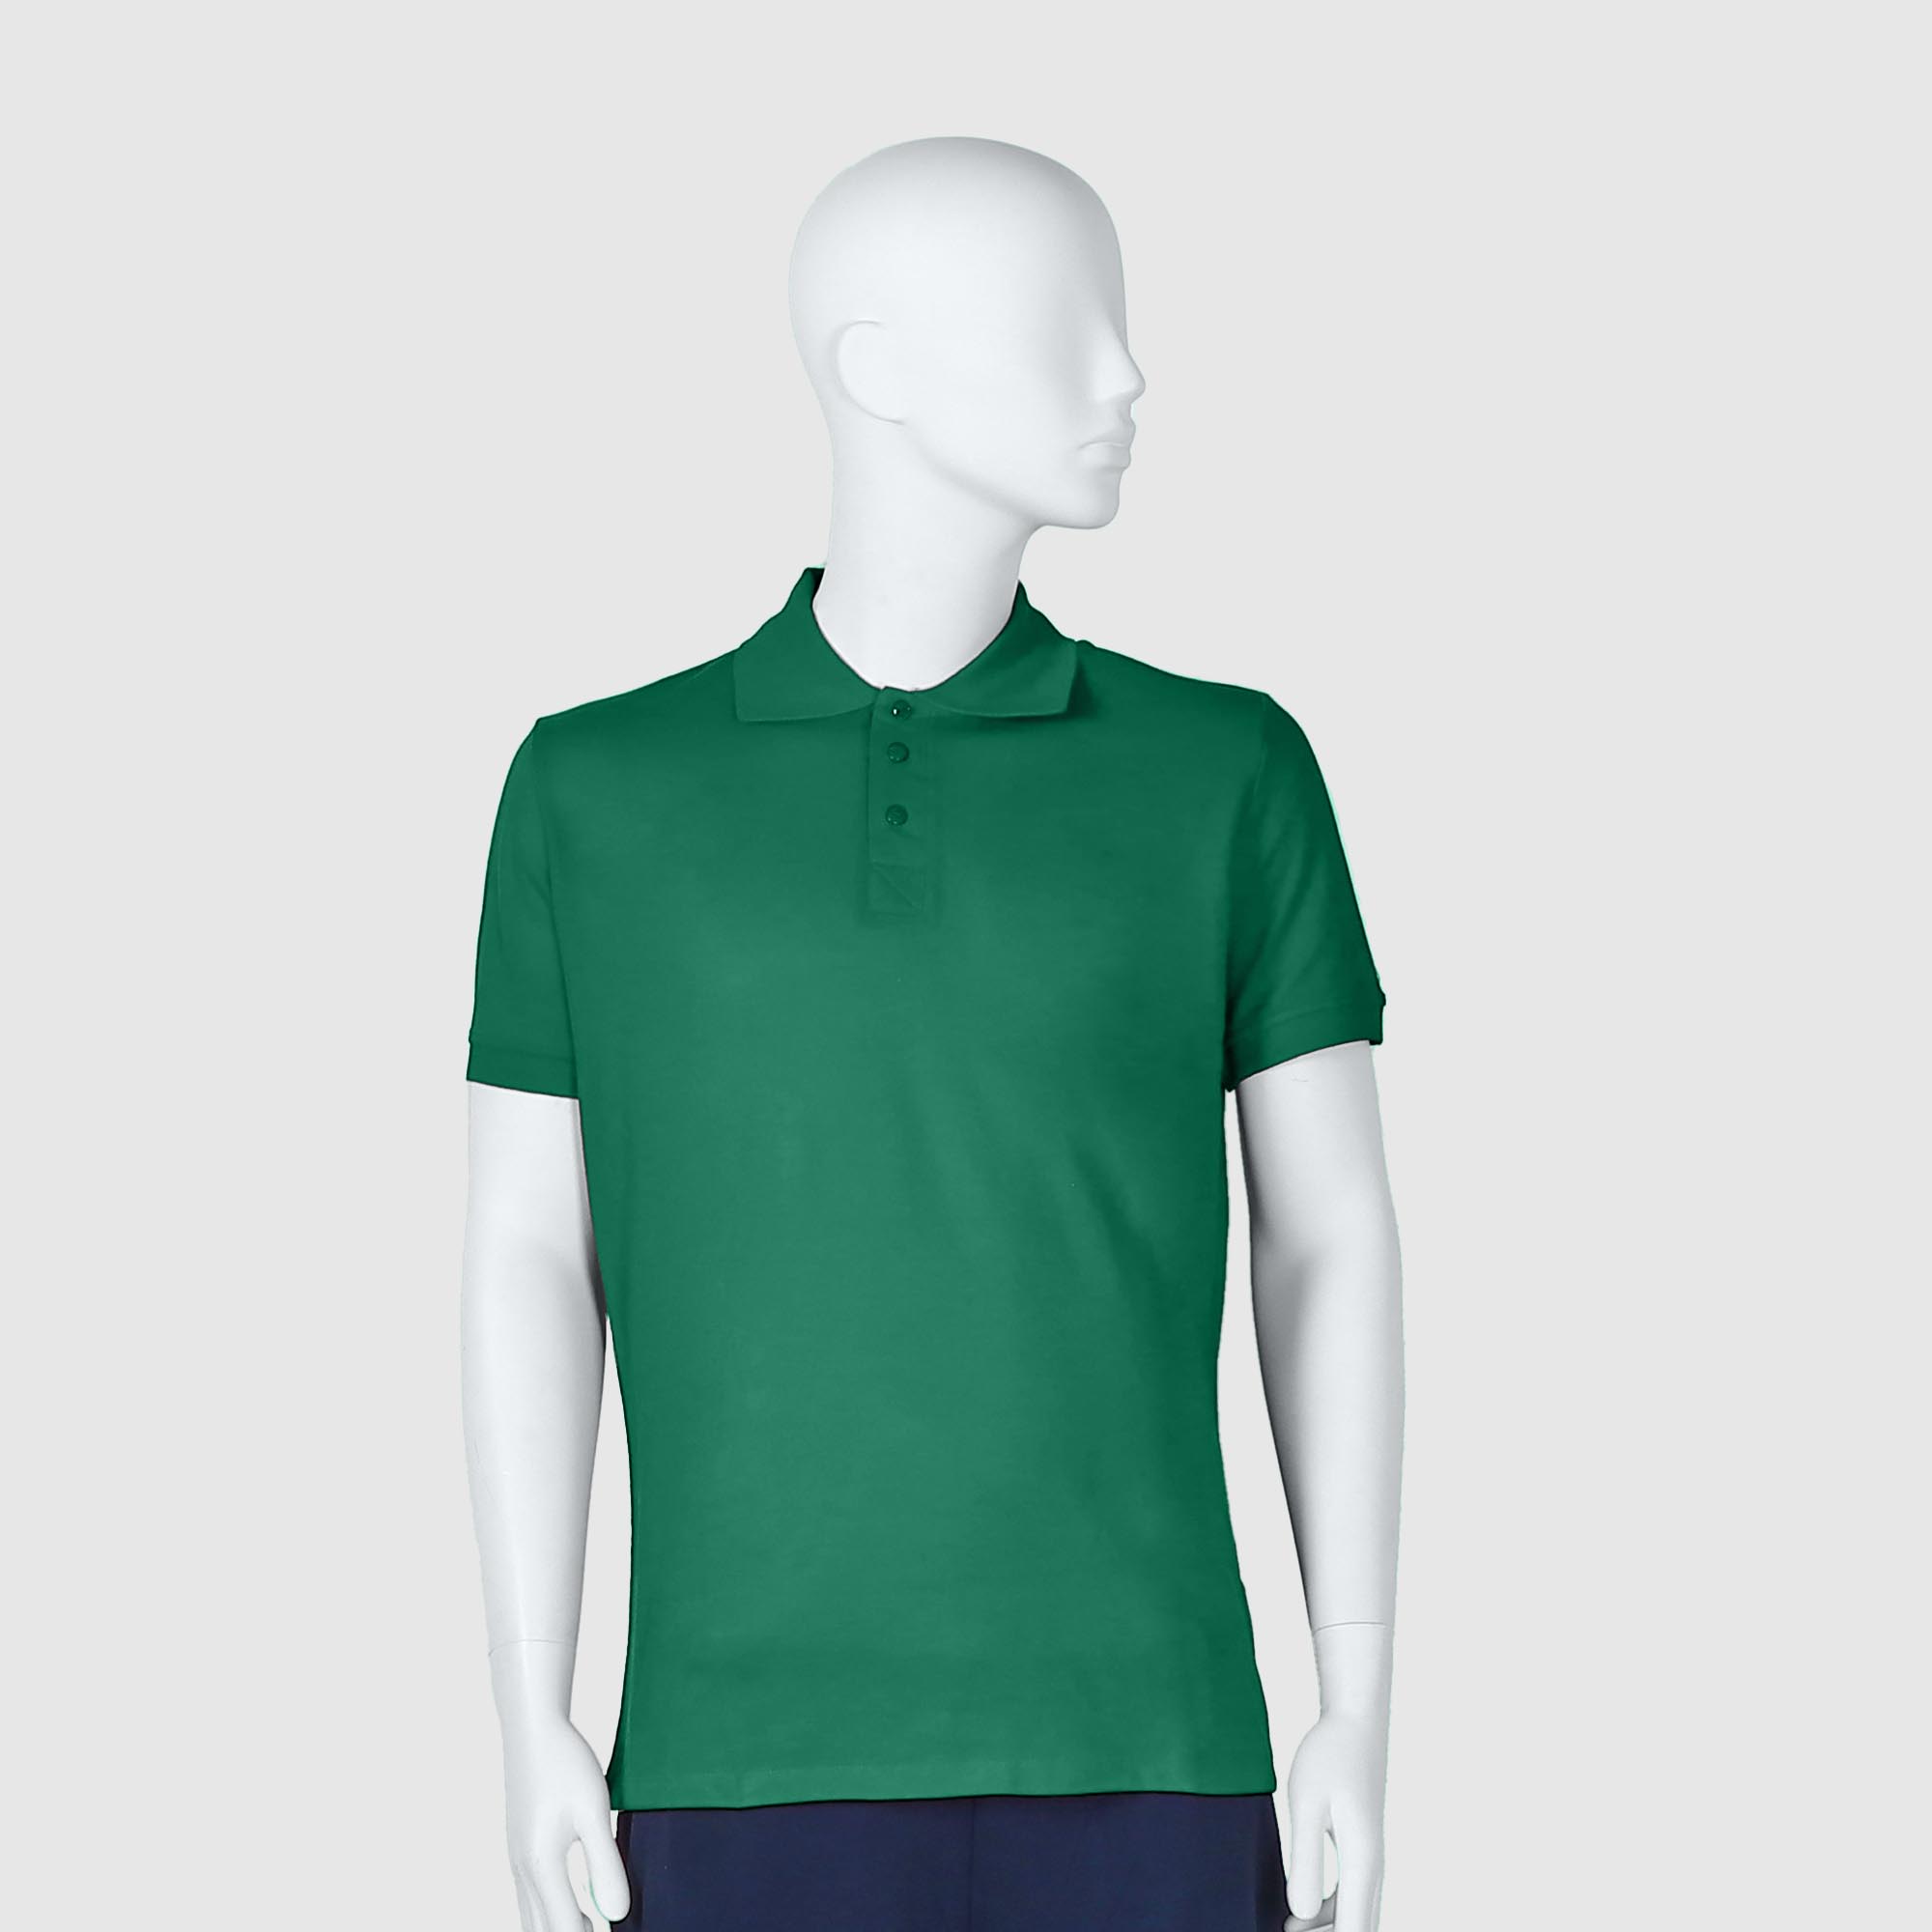 Мужская футболка-поло Diva Teks зелёная (DTD-09), цвет зелёный, размер 46-48